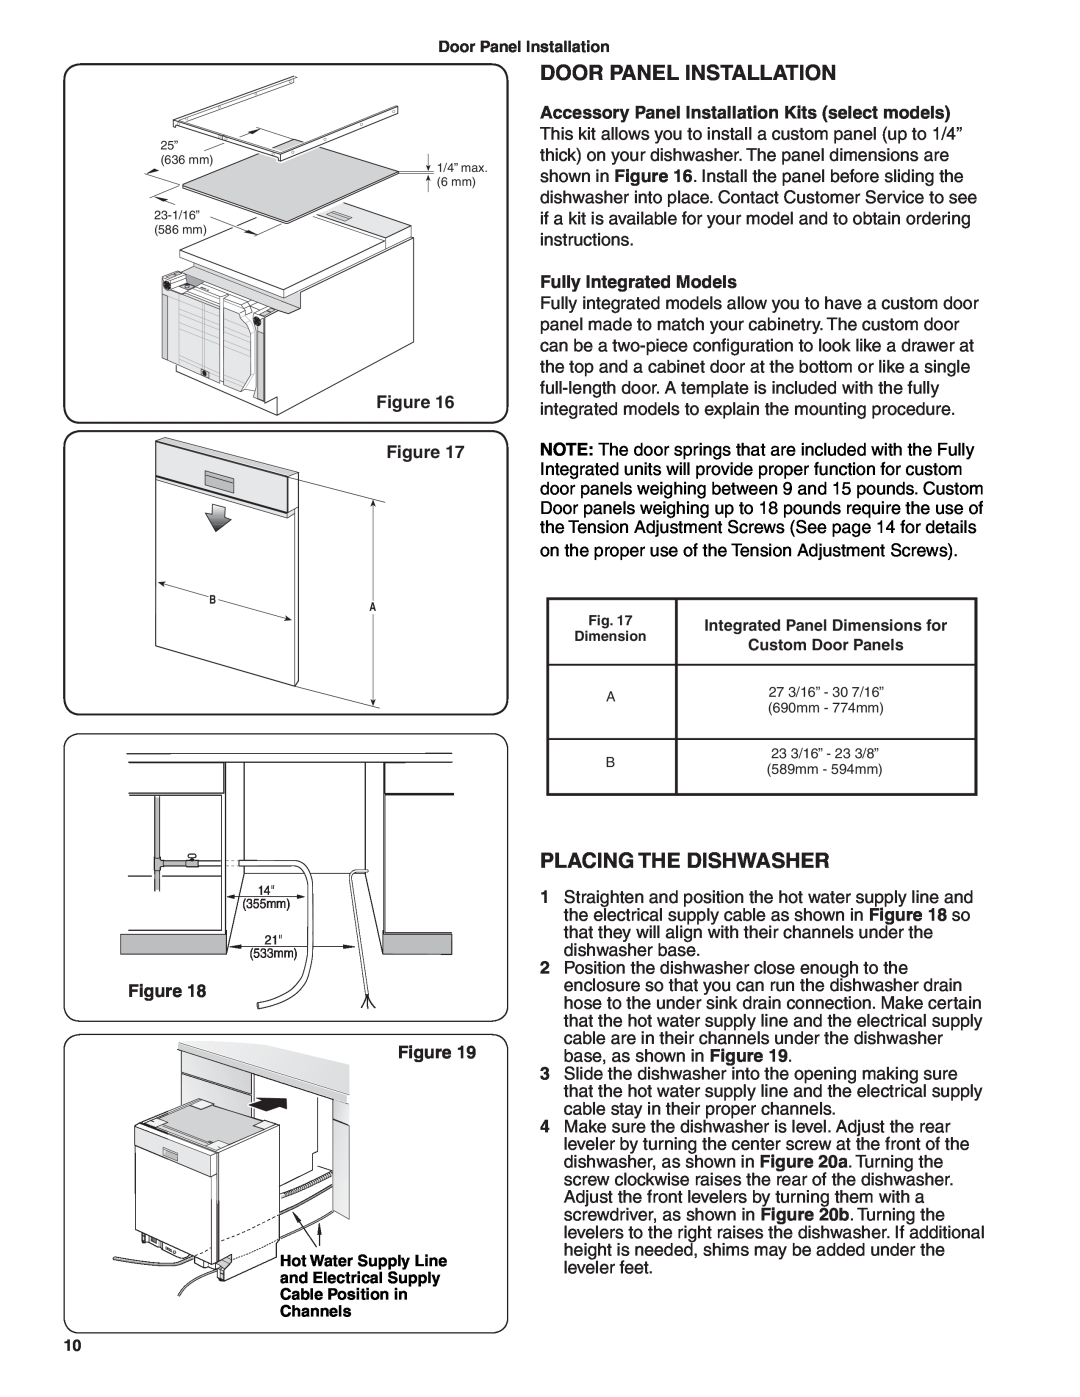 Bosch Appliances BSH Dishwasher Door Panel Installation, Placing The Dishwasher, Figure Figure, Fully Integrated Models 